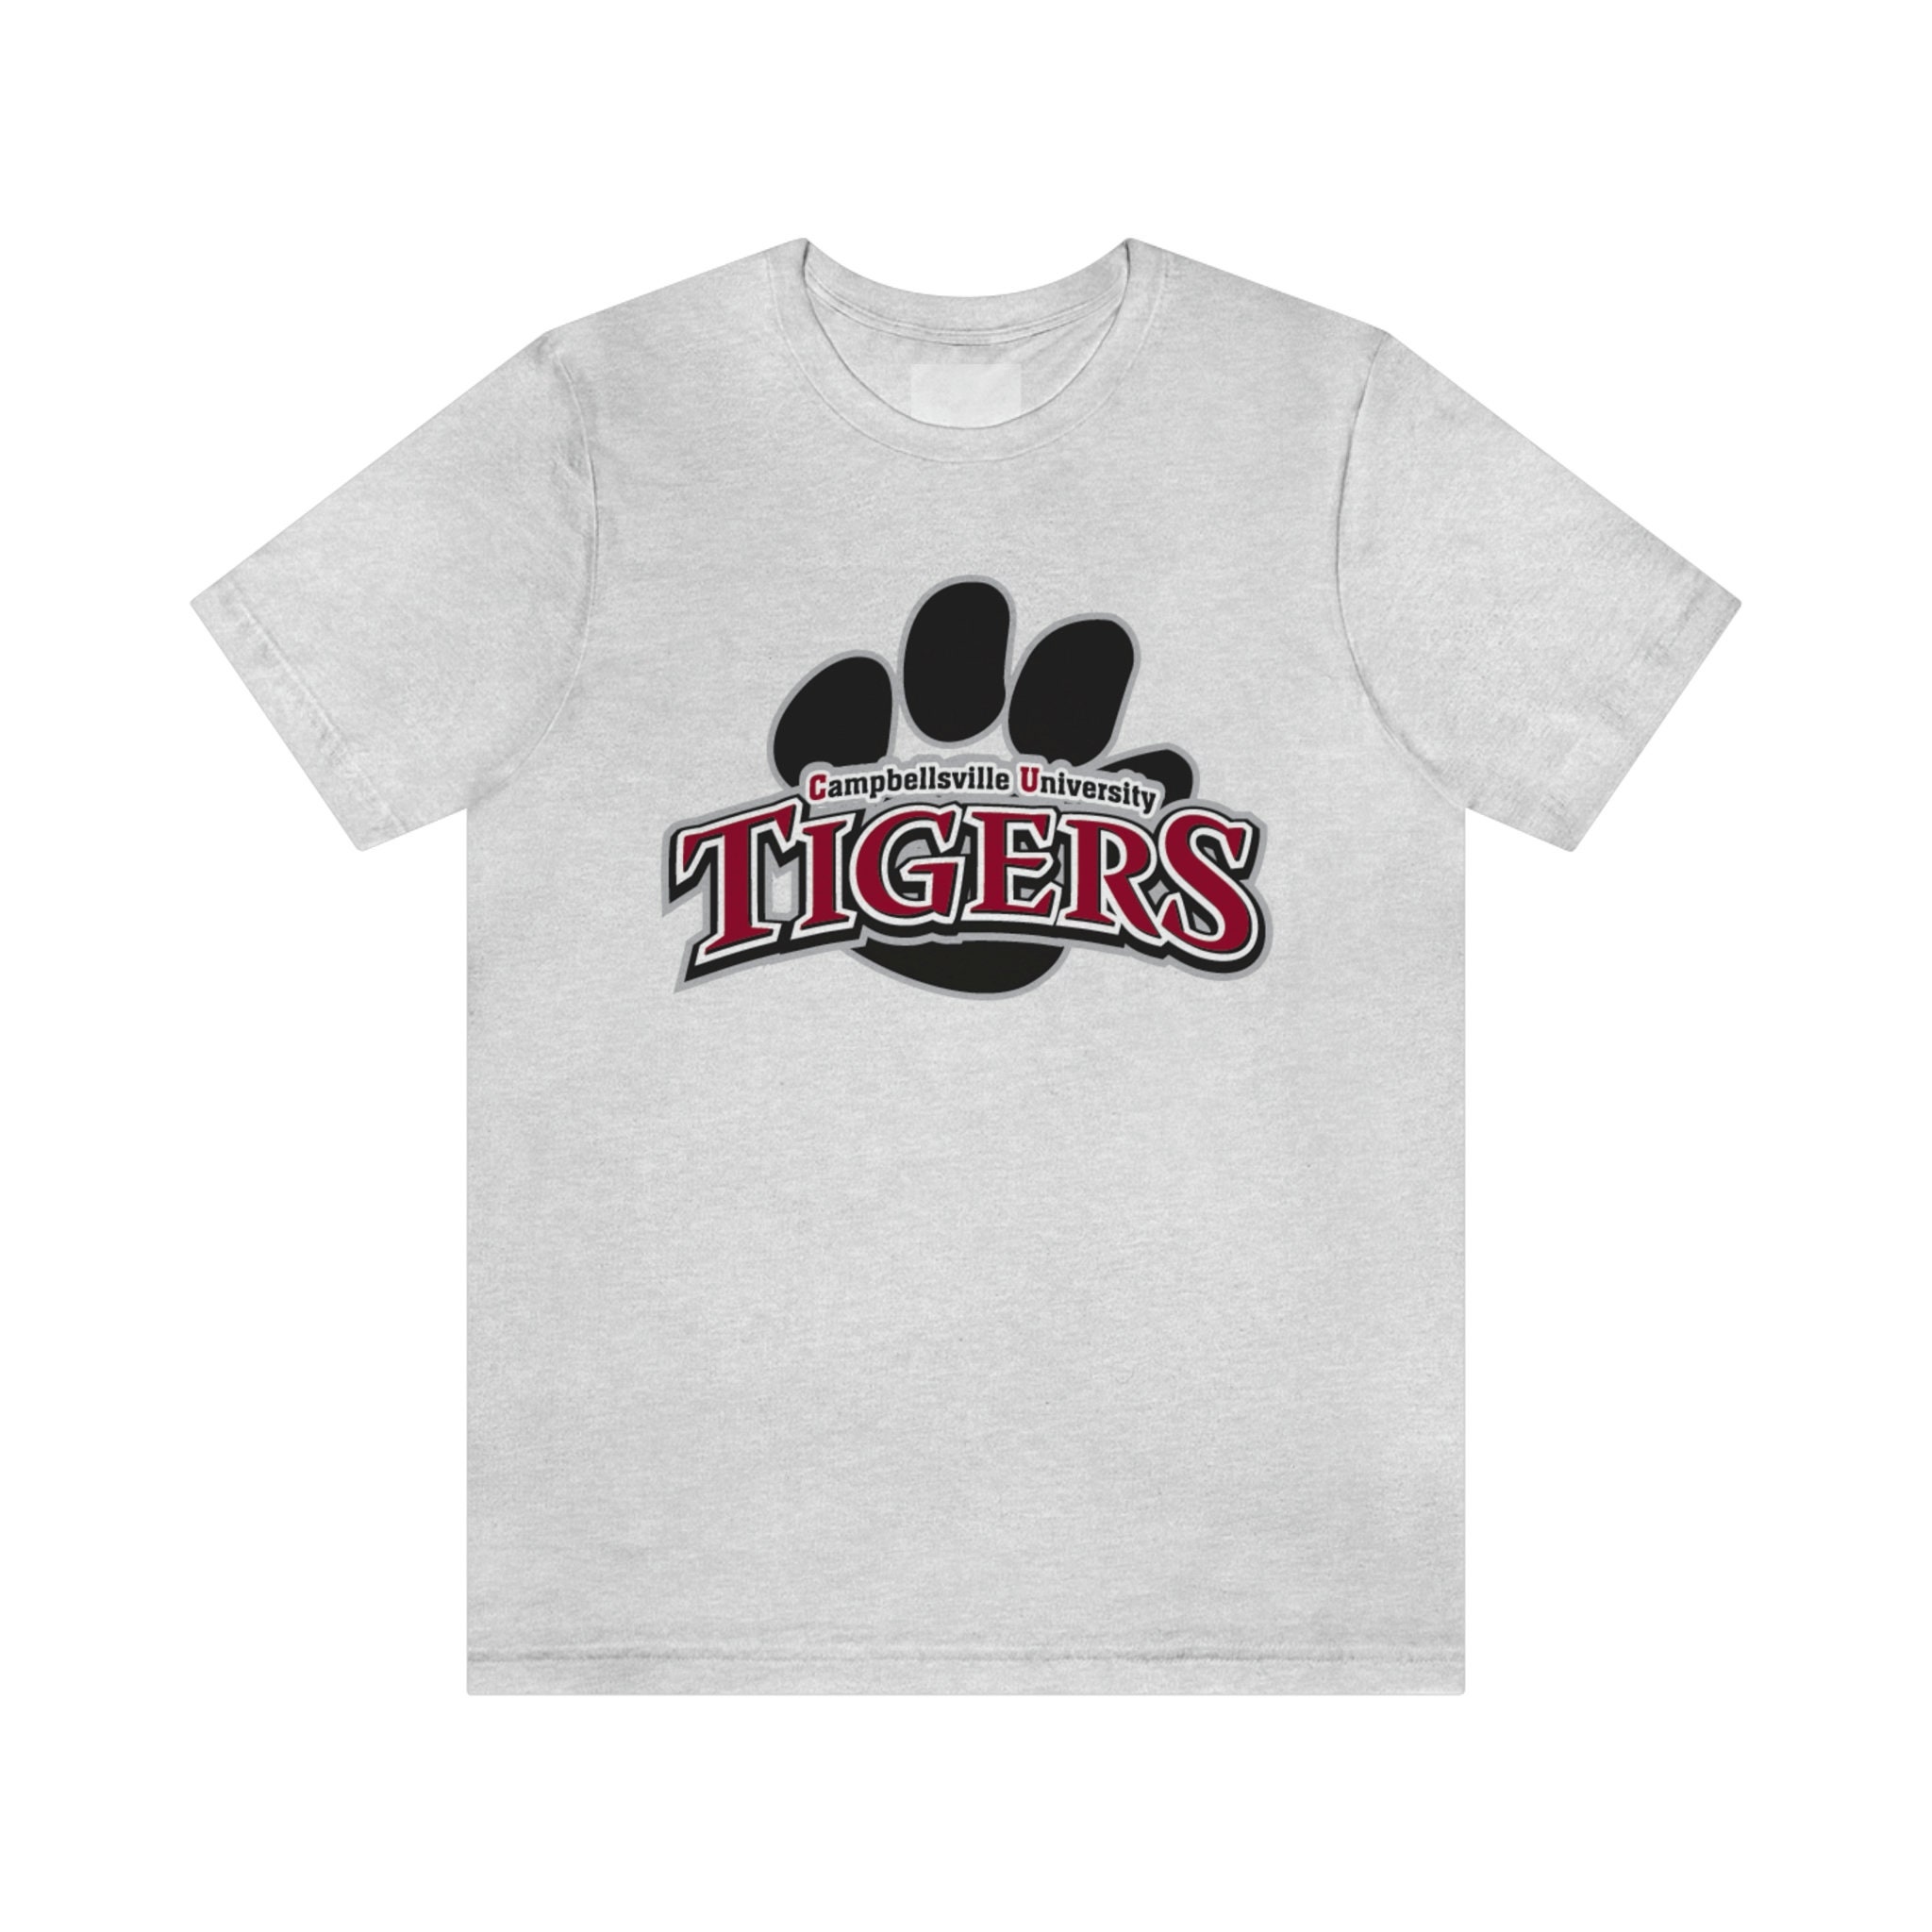 Campbellsville Tigers Gift Shop & Apparel, Tigers Basketball Gear